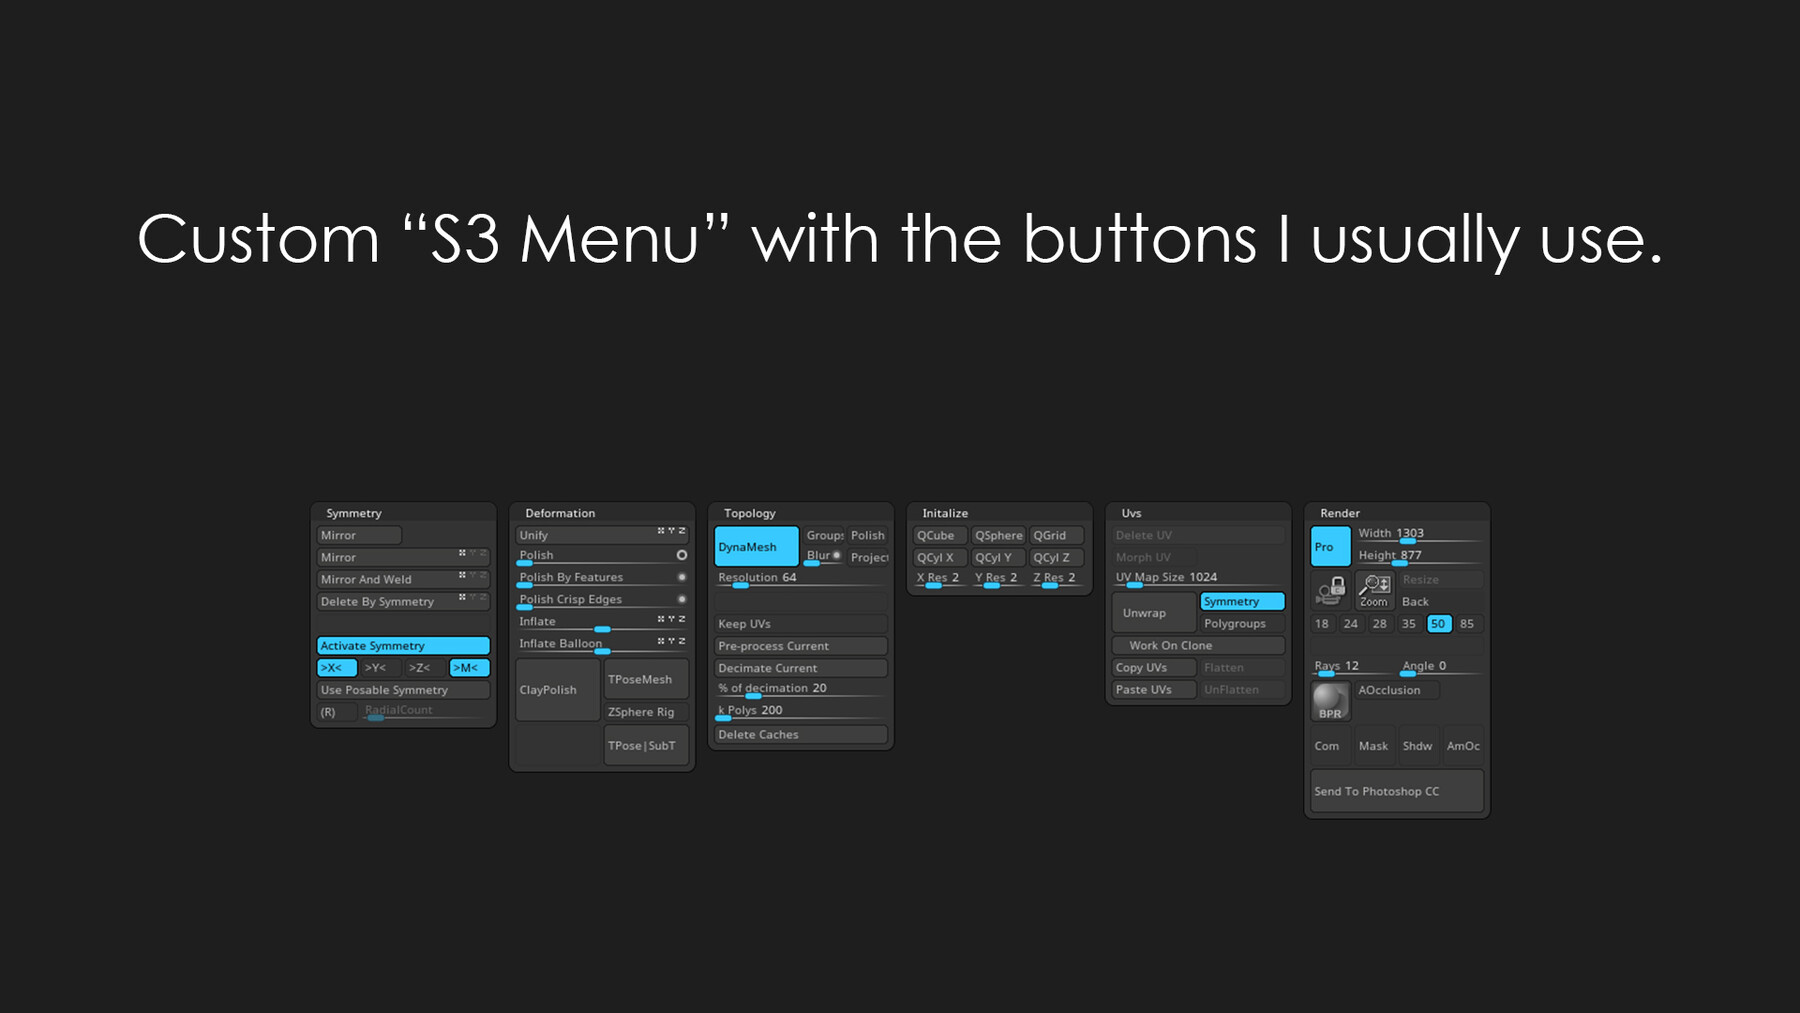 zbrush custom interface download